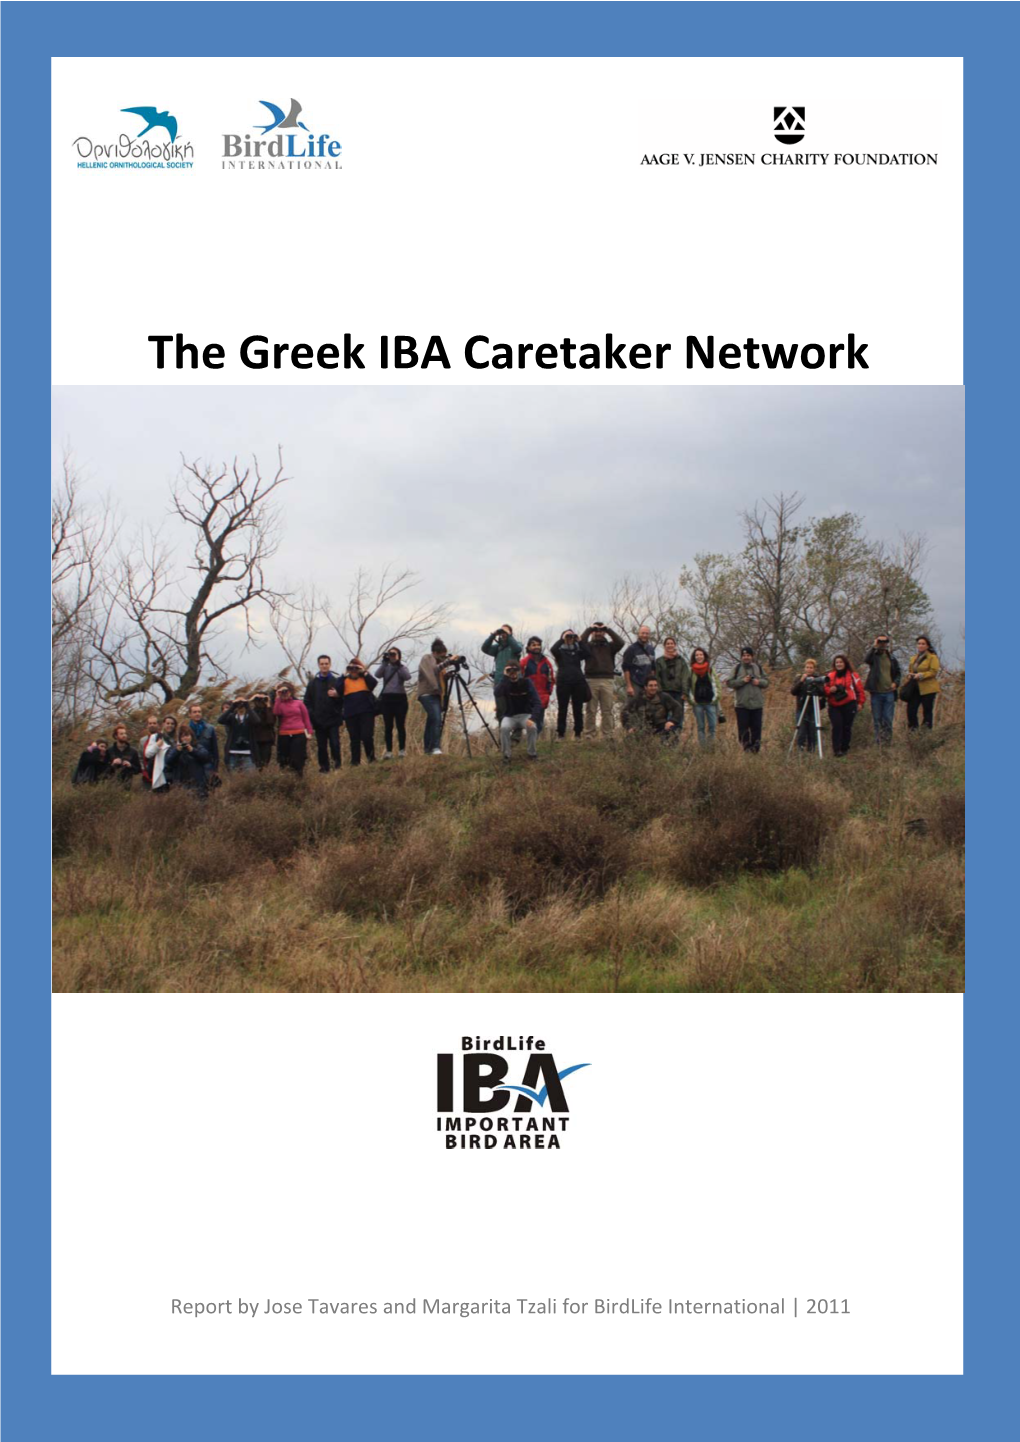 The Greek IBA Caretaker Network